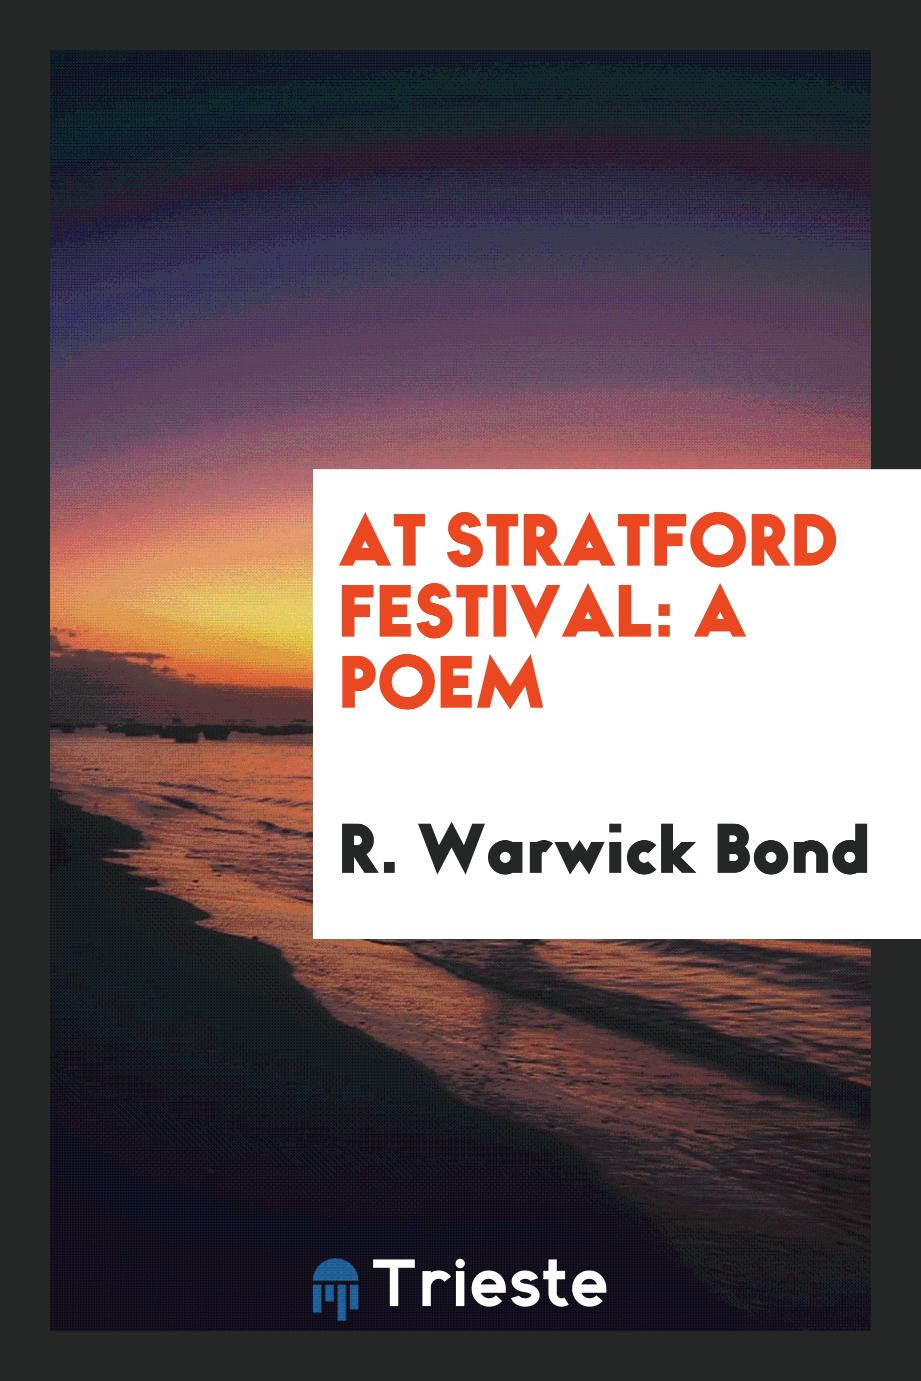 At Stratford festival: a poem